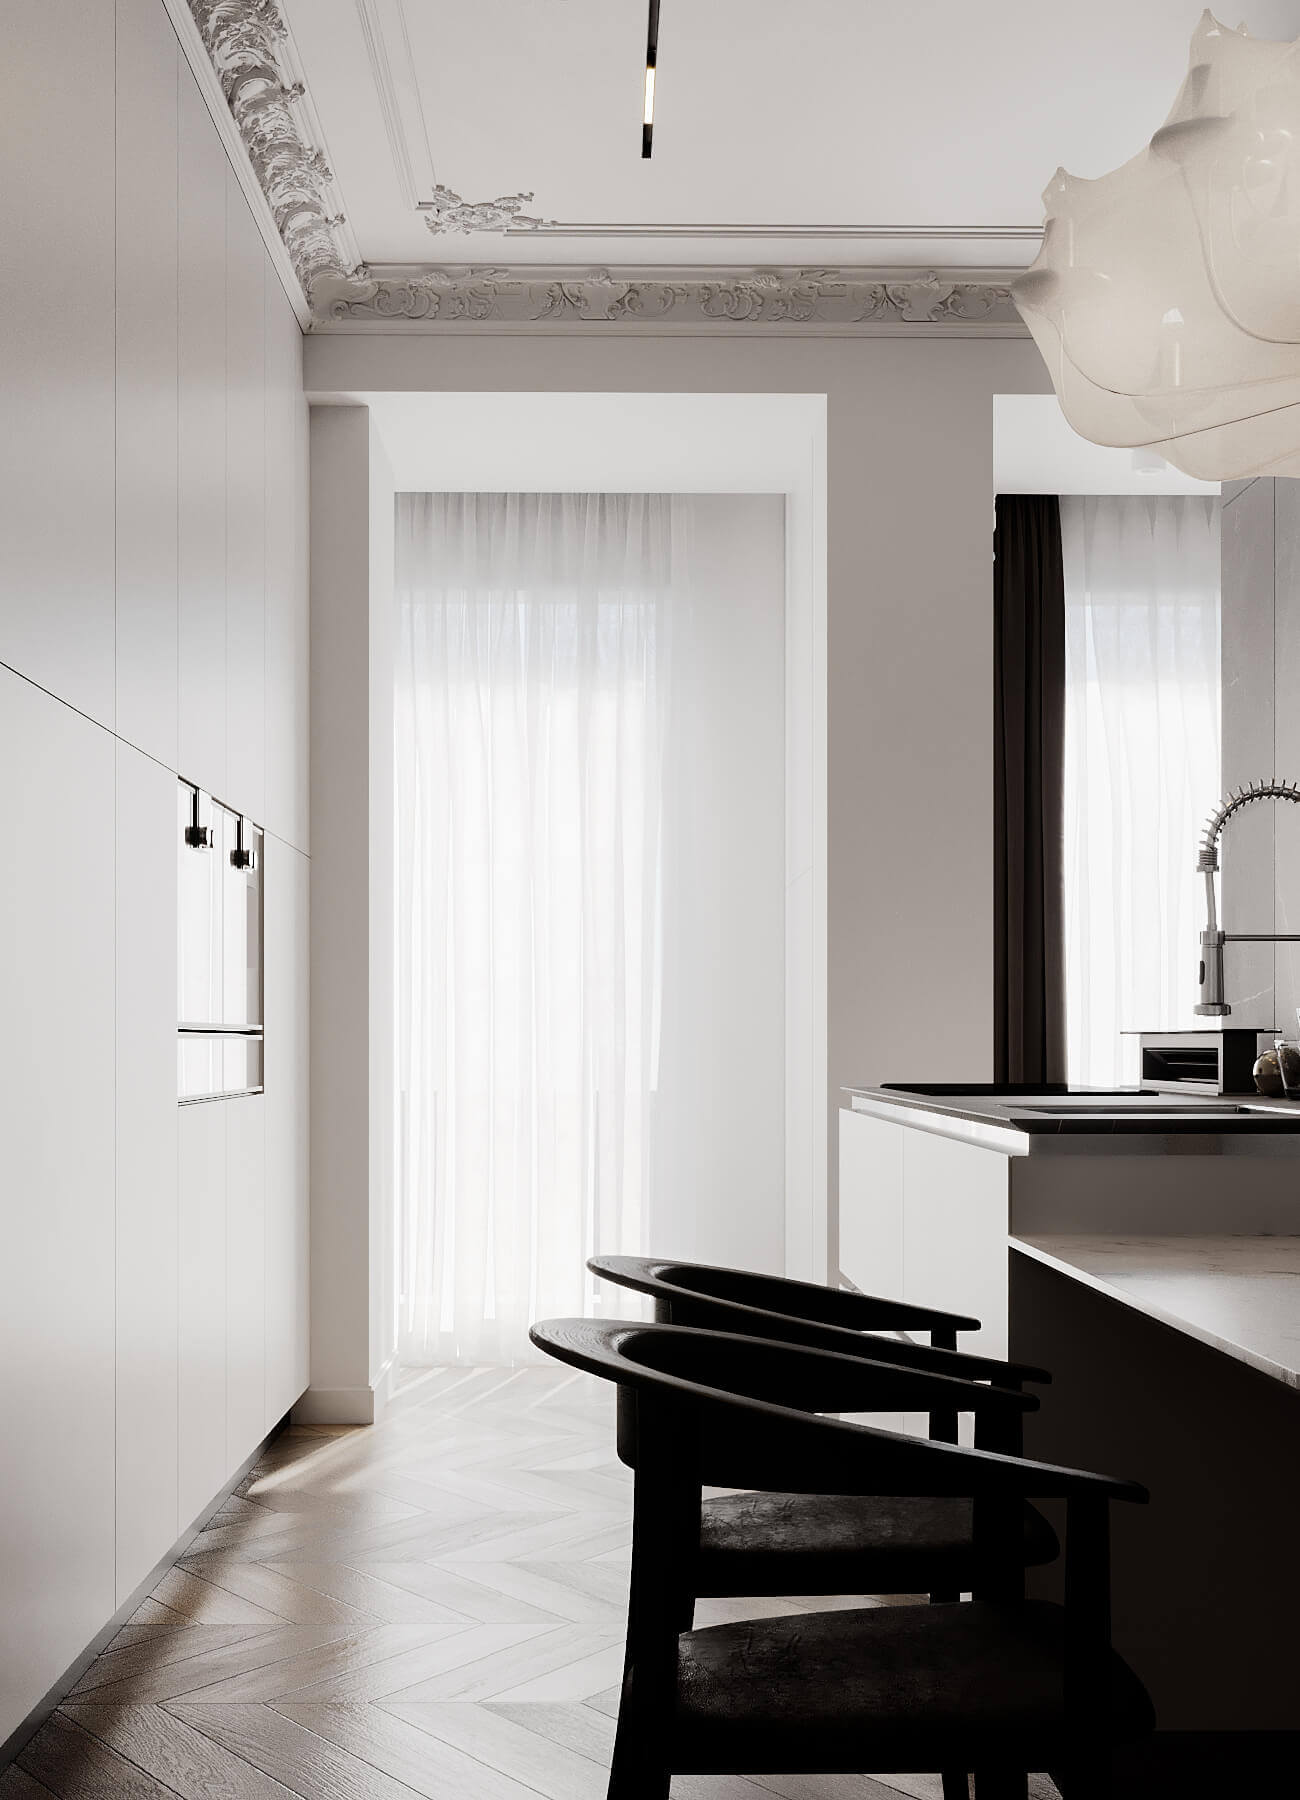 Bernardazzi Apartment dining room kitchen design - cgi visualization